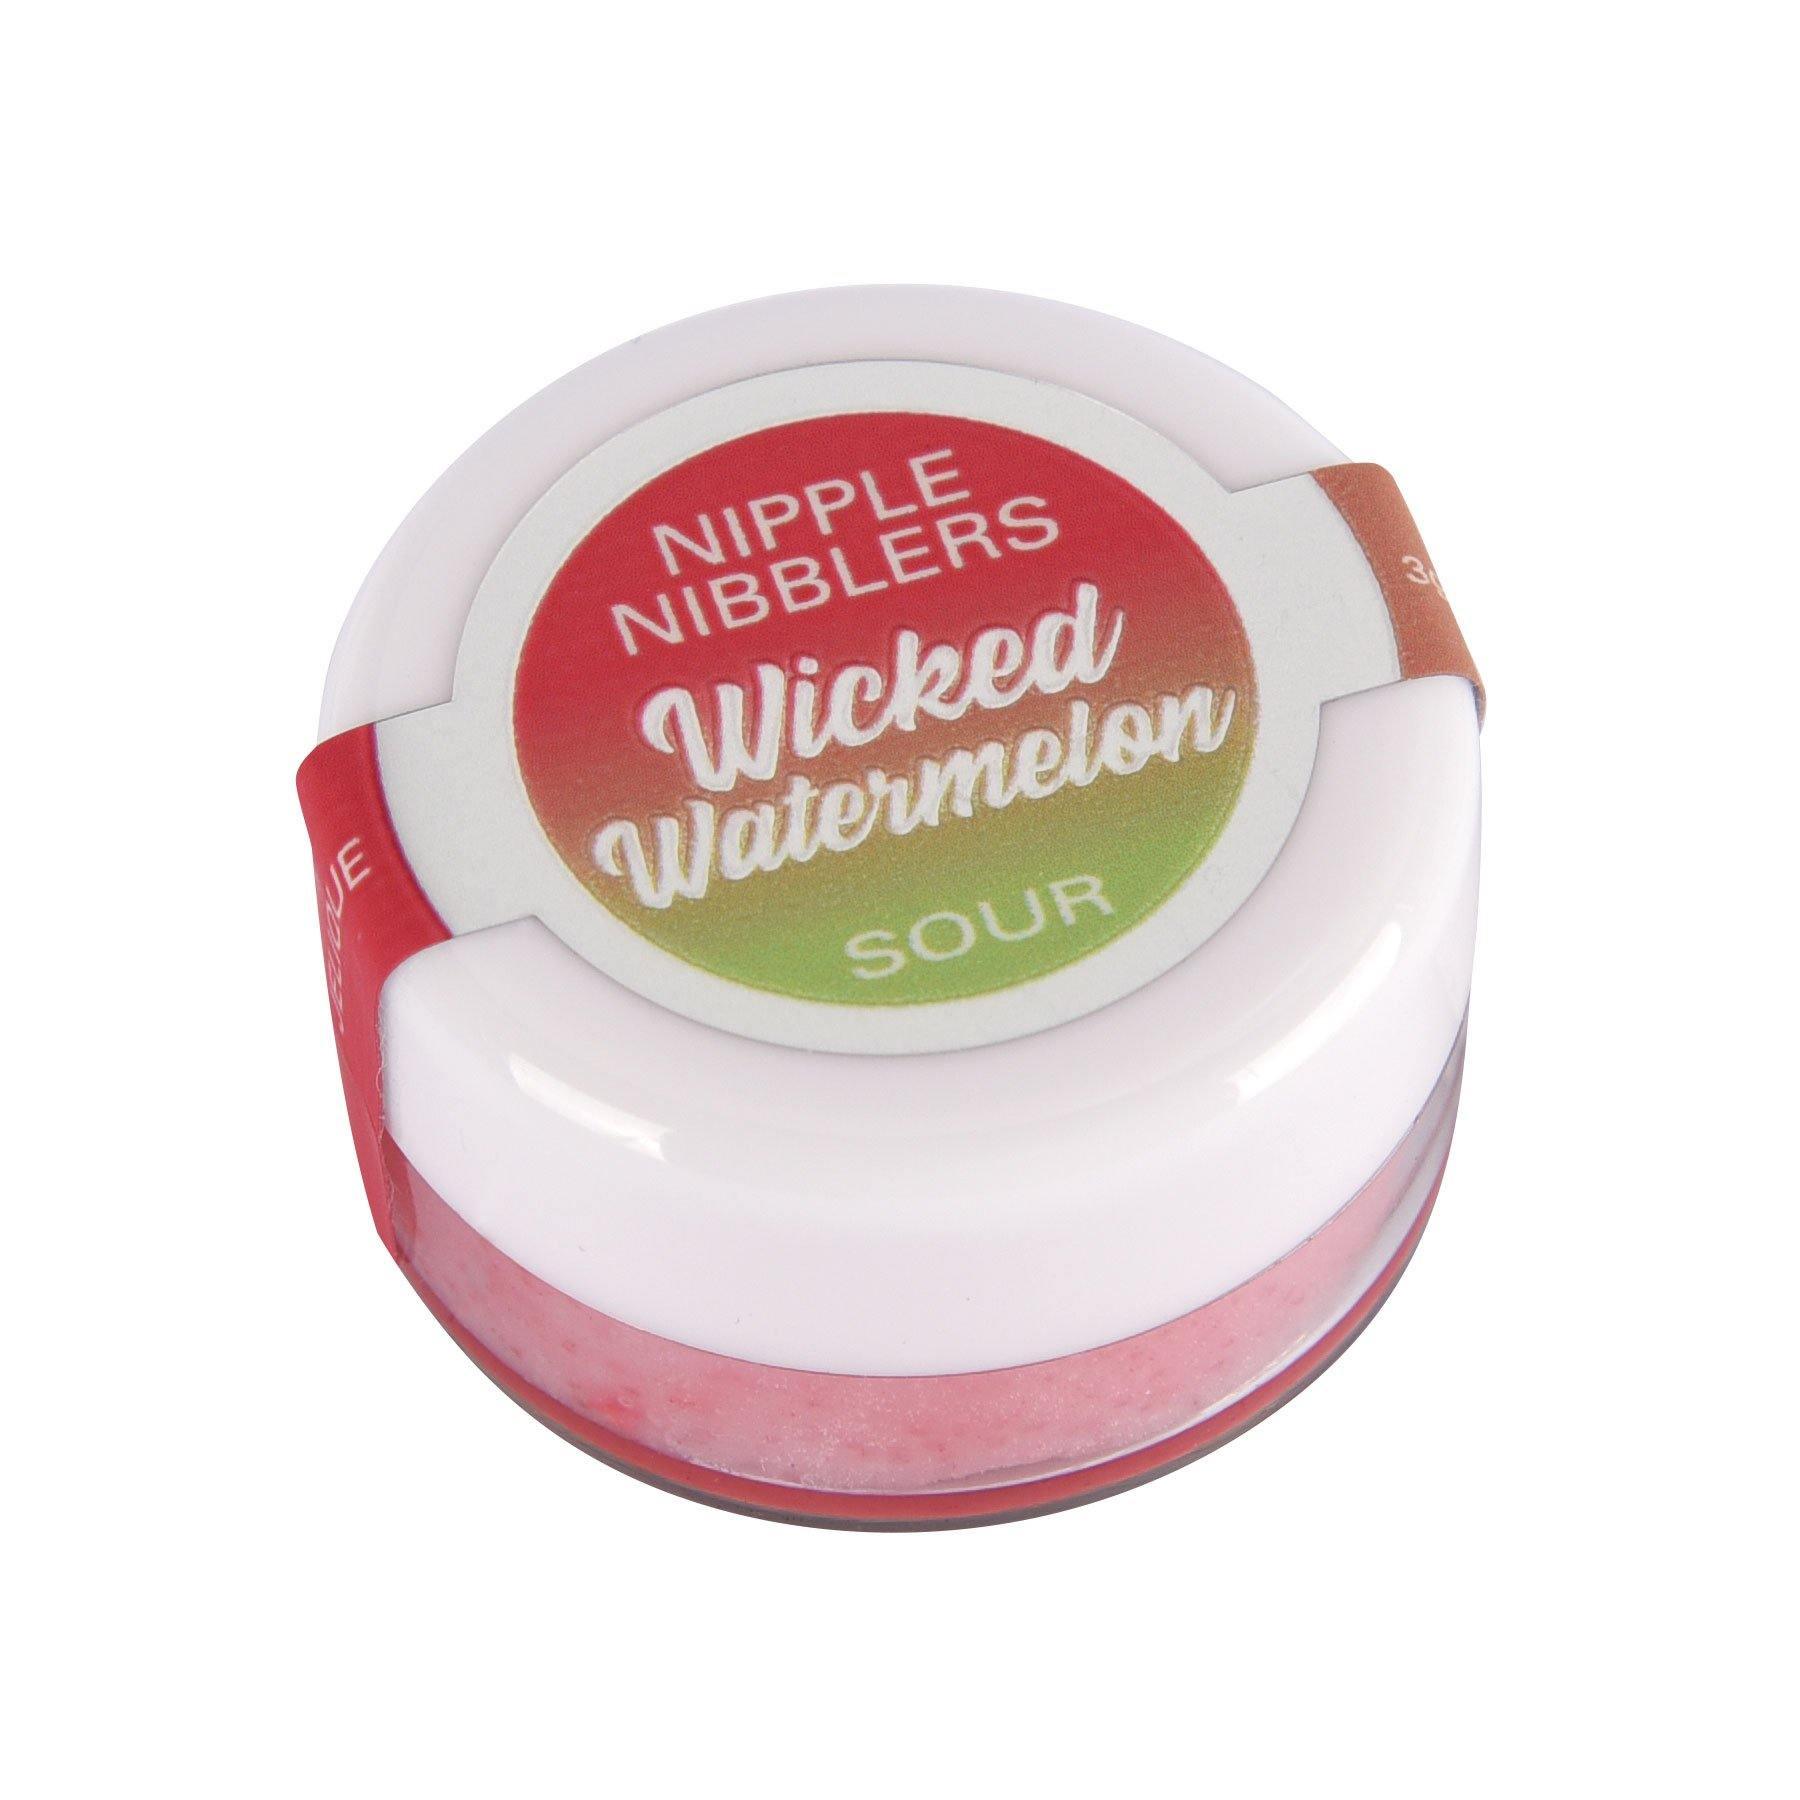 Nipple Nibbler Sour Pleasure Balm Wicked Watermelon - 3g Jar - My Sex Toy Hub